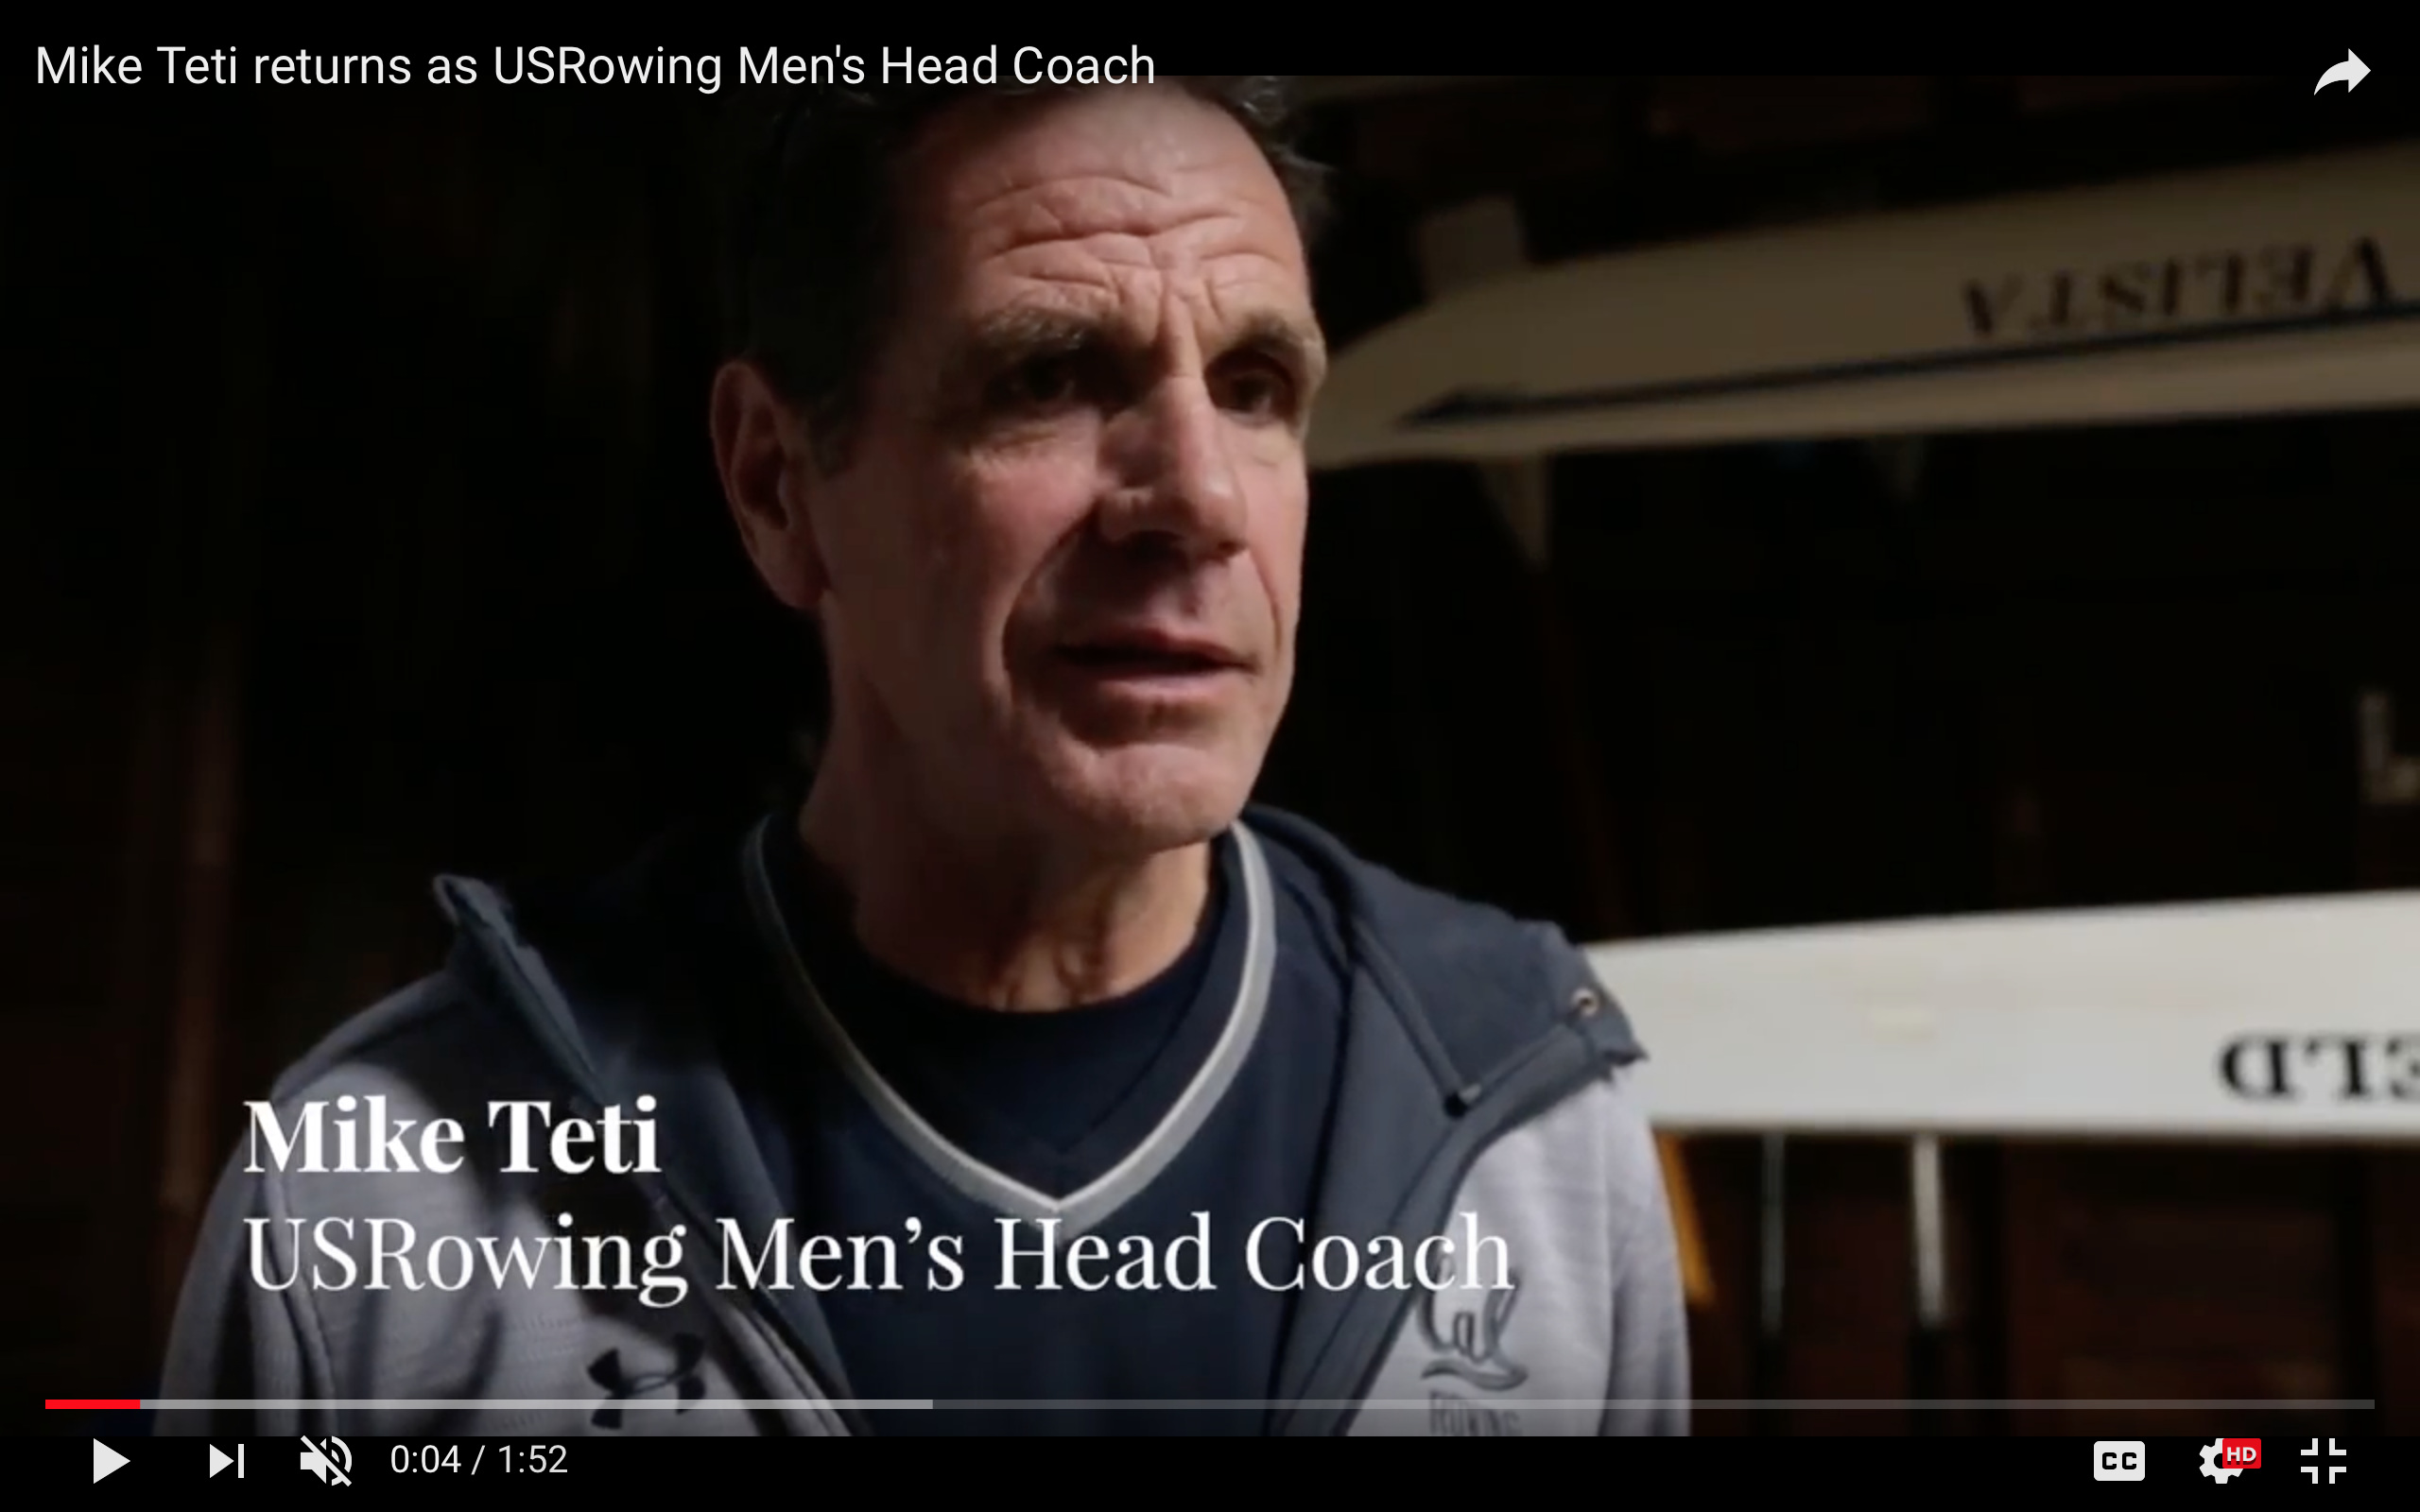 Teti Back at the Helm of U.S. Men's Team